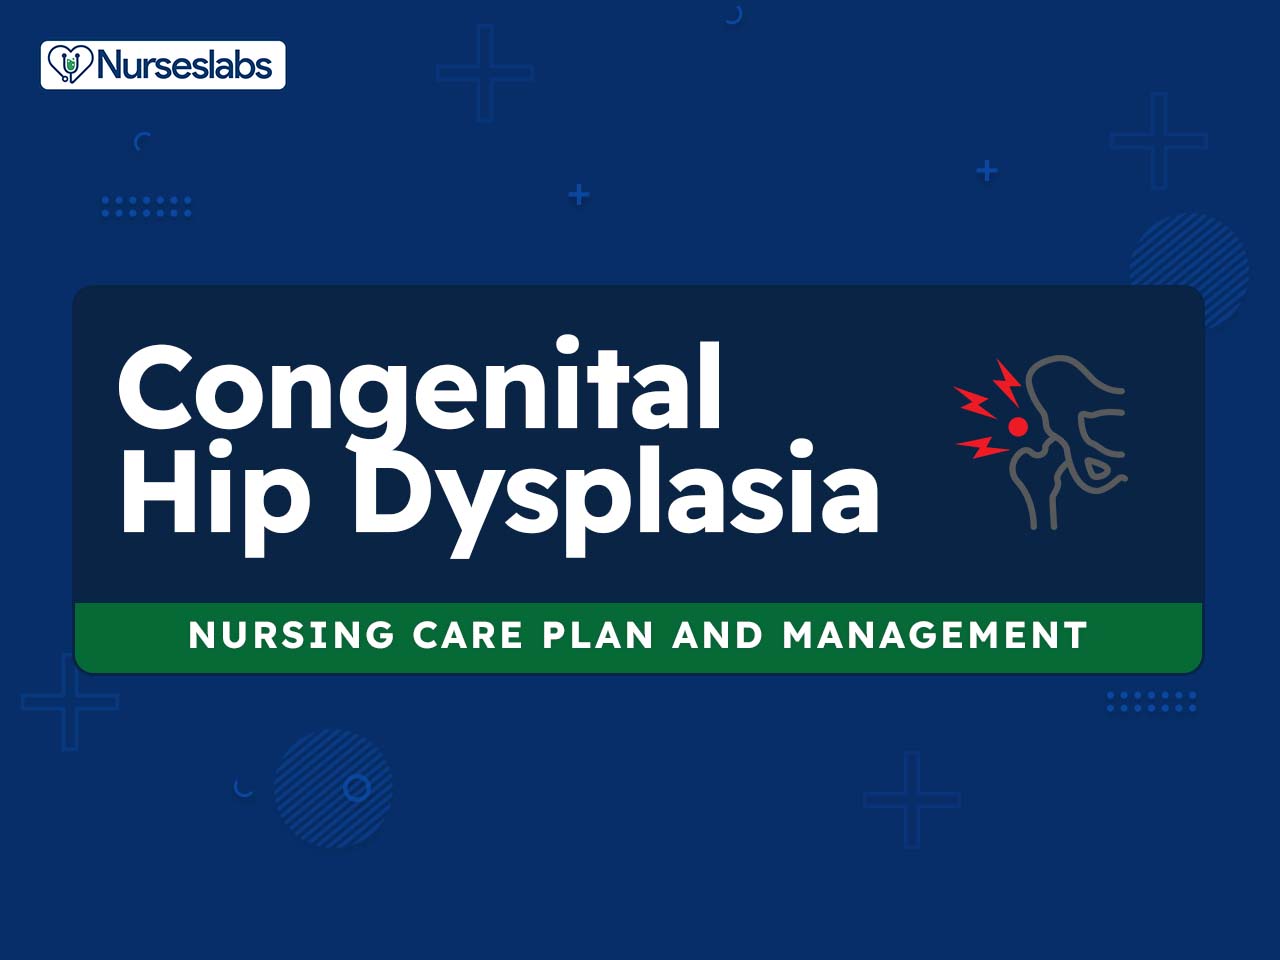 https://nurseslabs.com/wp-content/uploads/2018/08/Congenital-Hip-Dysplasia-Nursing-Care-Plans-and-Nursing-Diagnosis.jpg